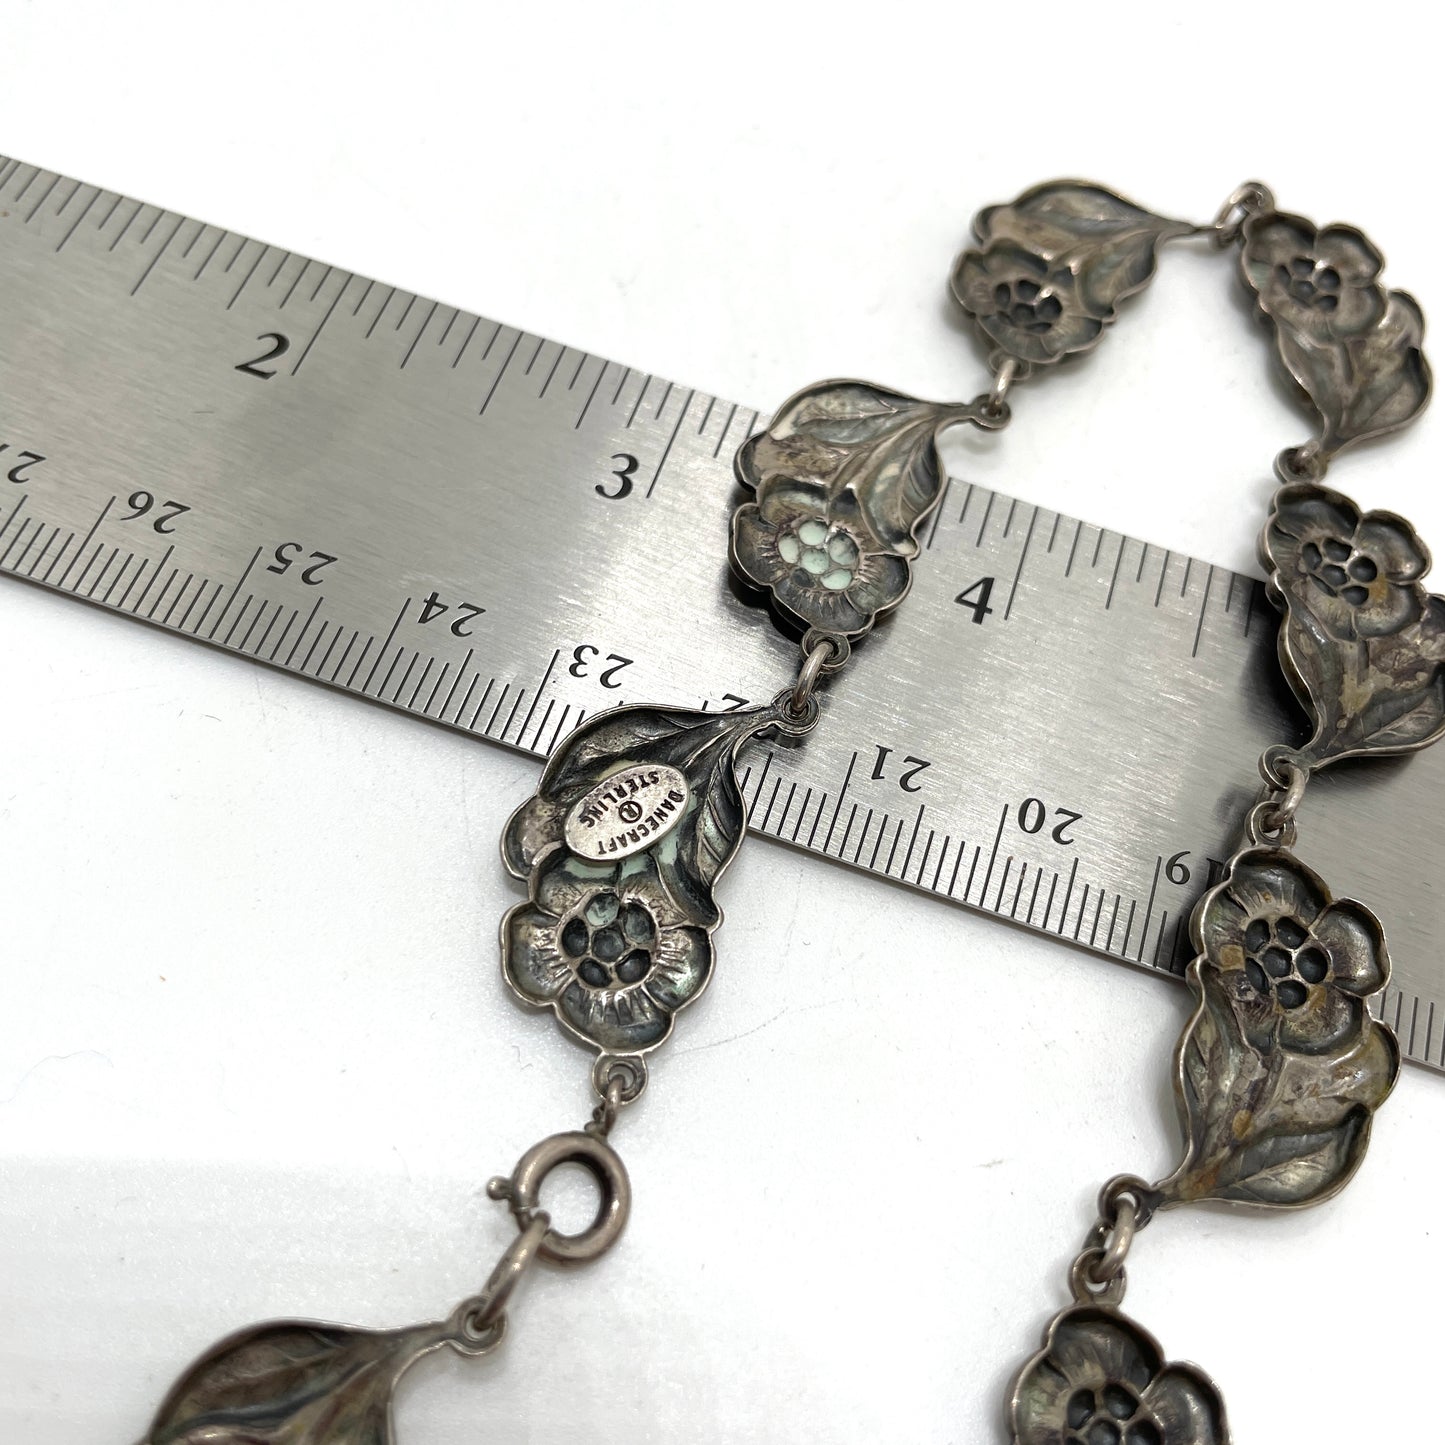 Vintage Sterling Silver Flower Necklace - Choker or Child's Size